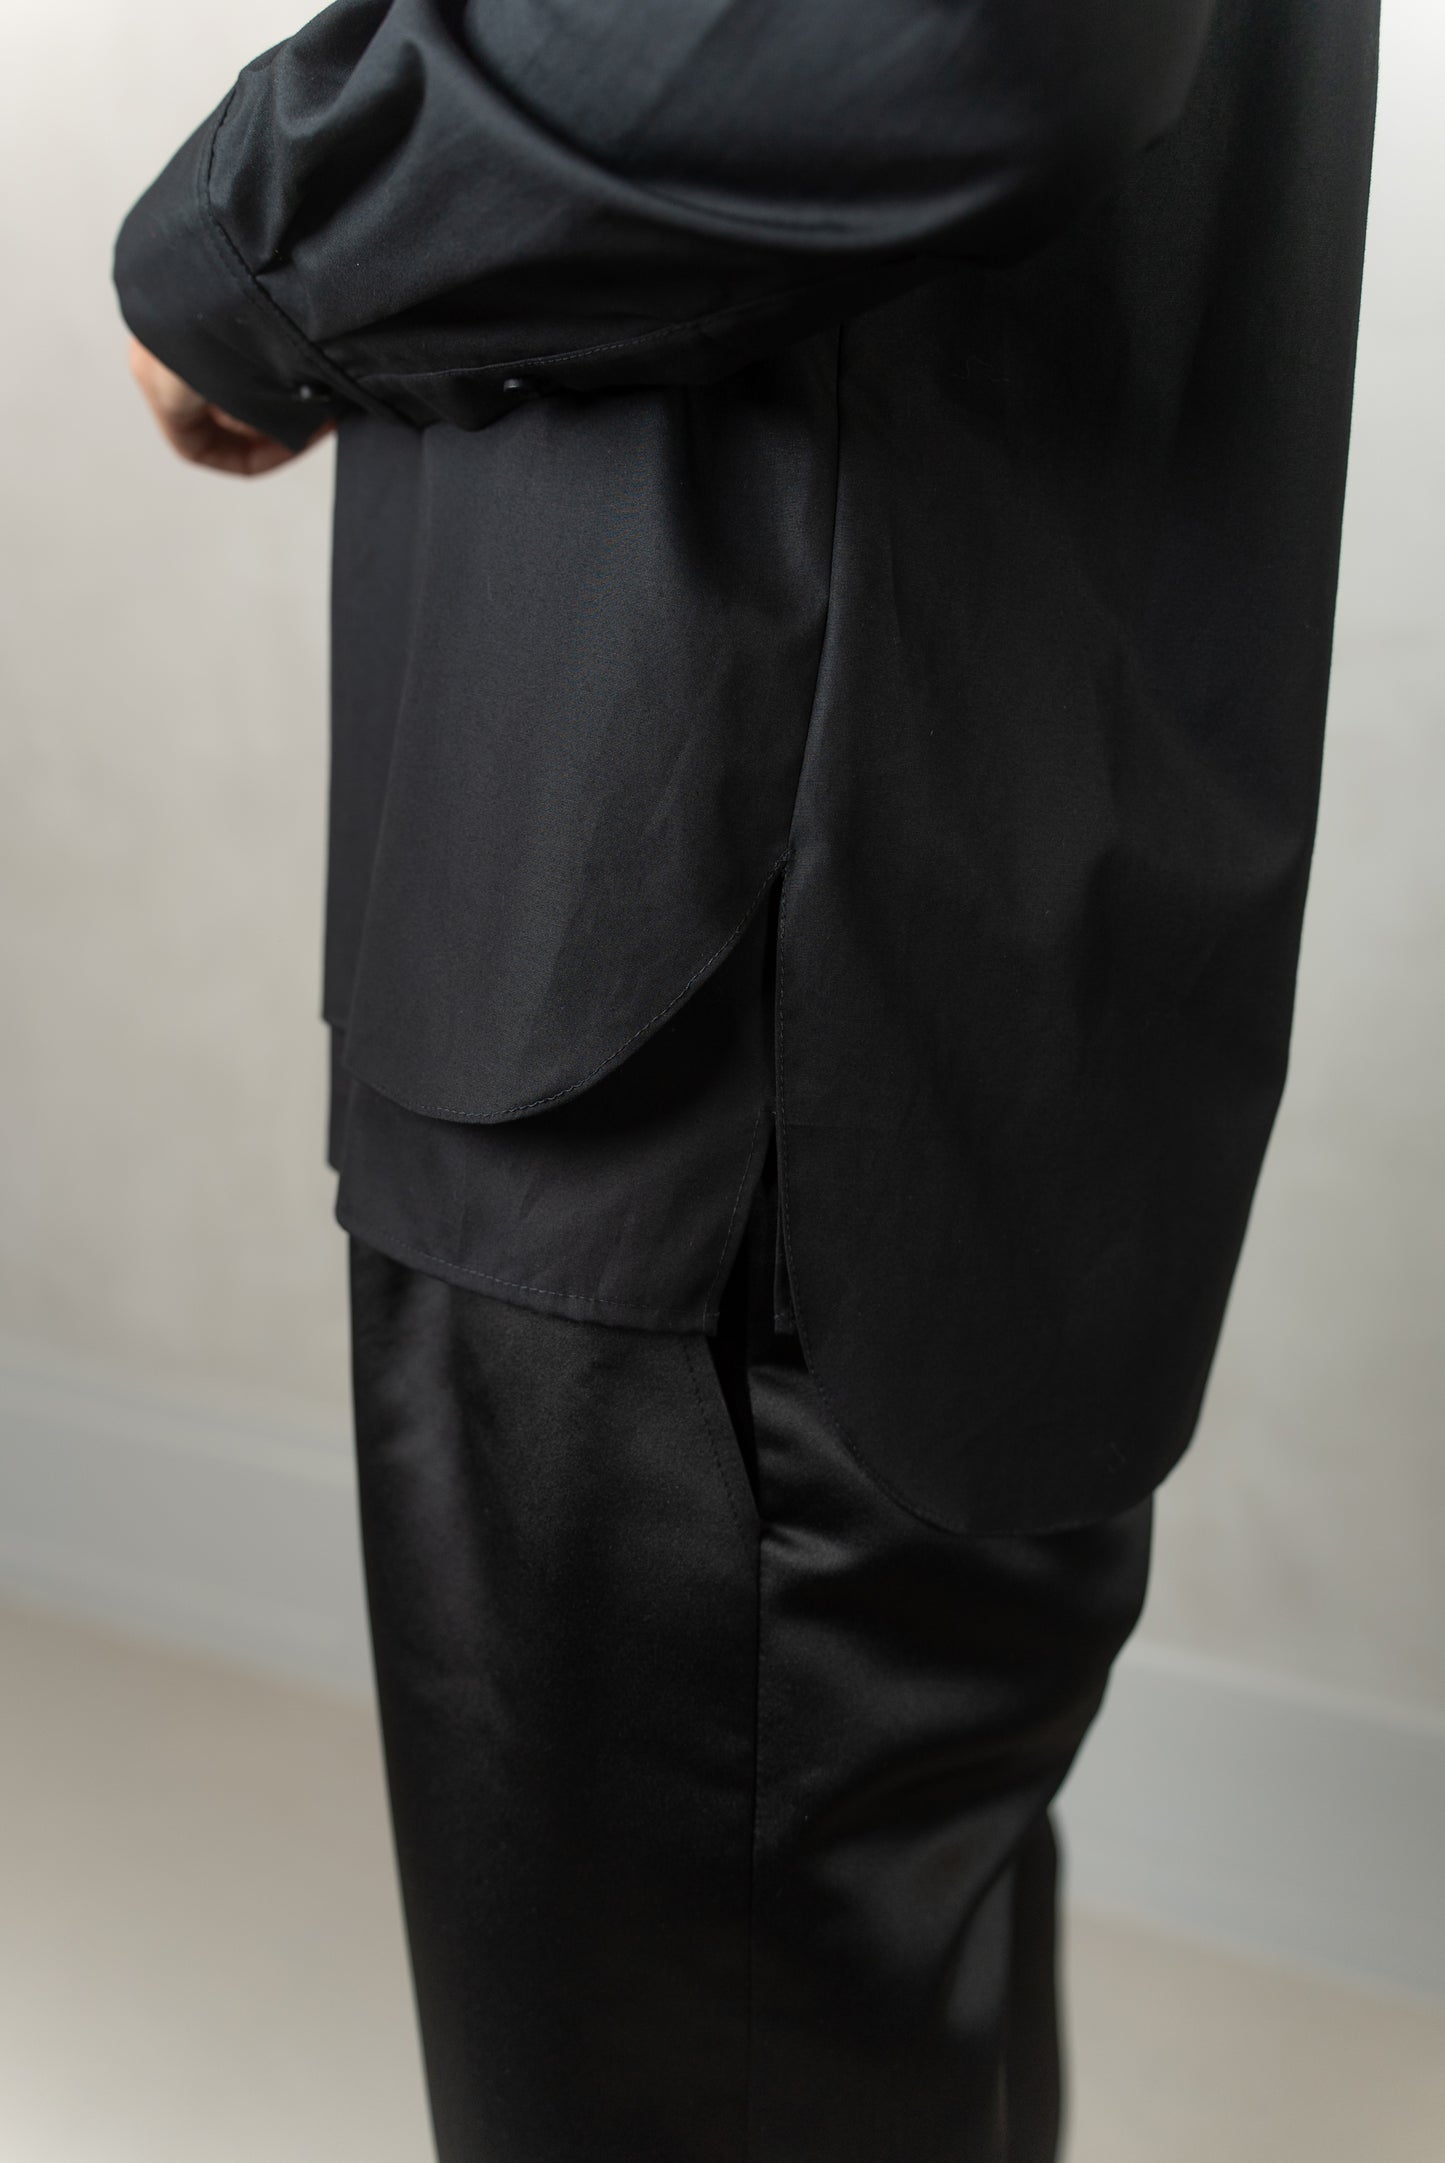 Detail view of Abbey shirt black side & Agnes trousers (black)